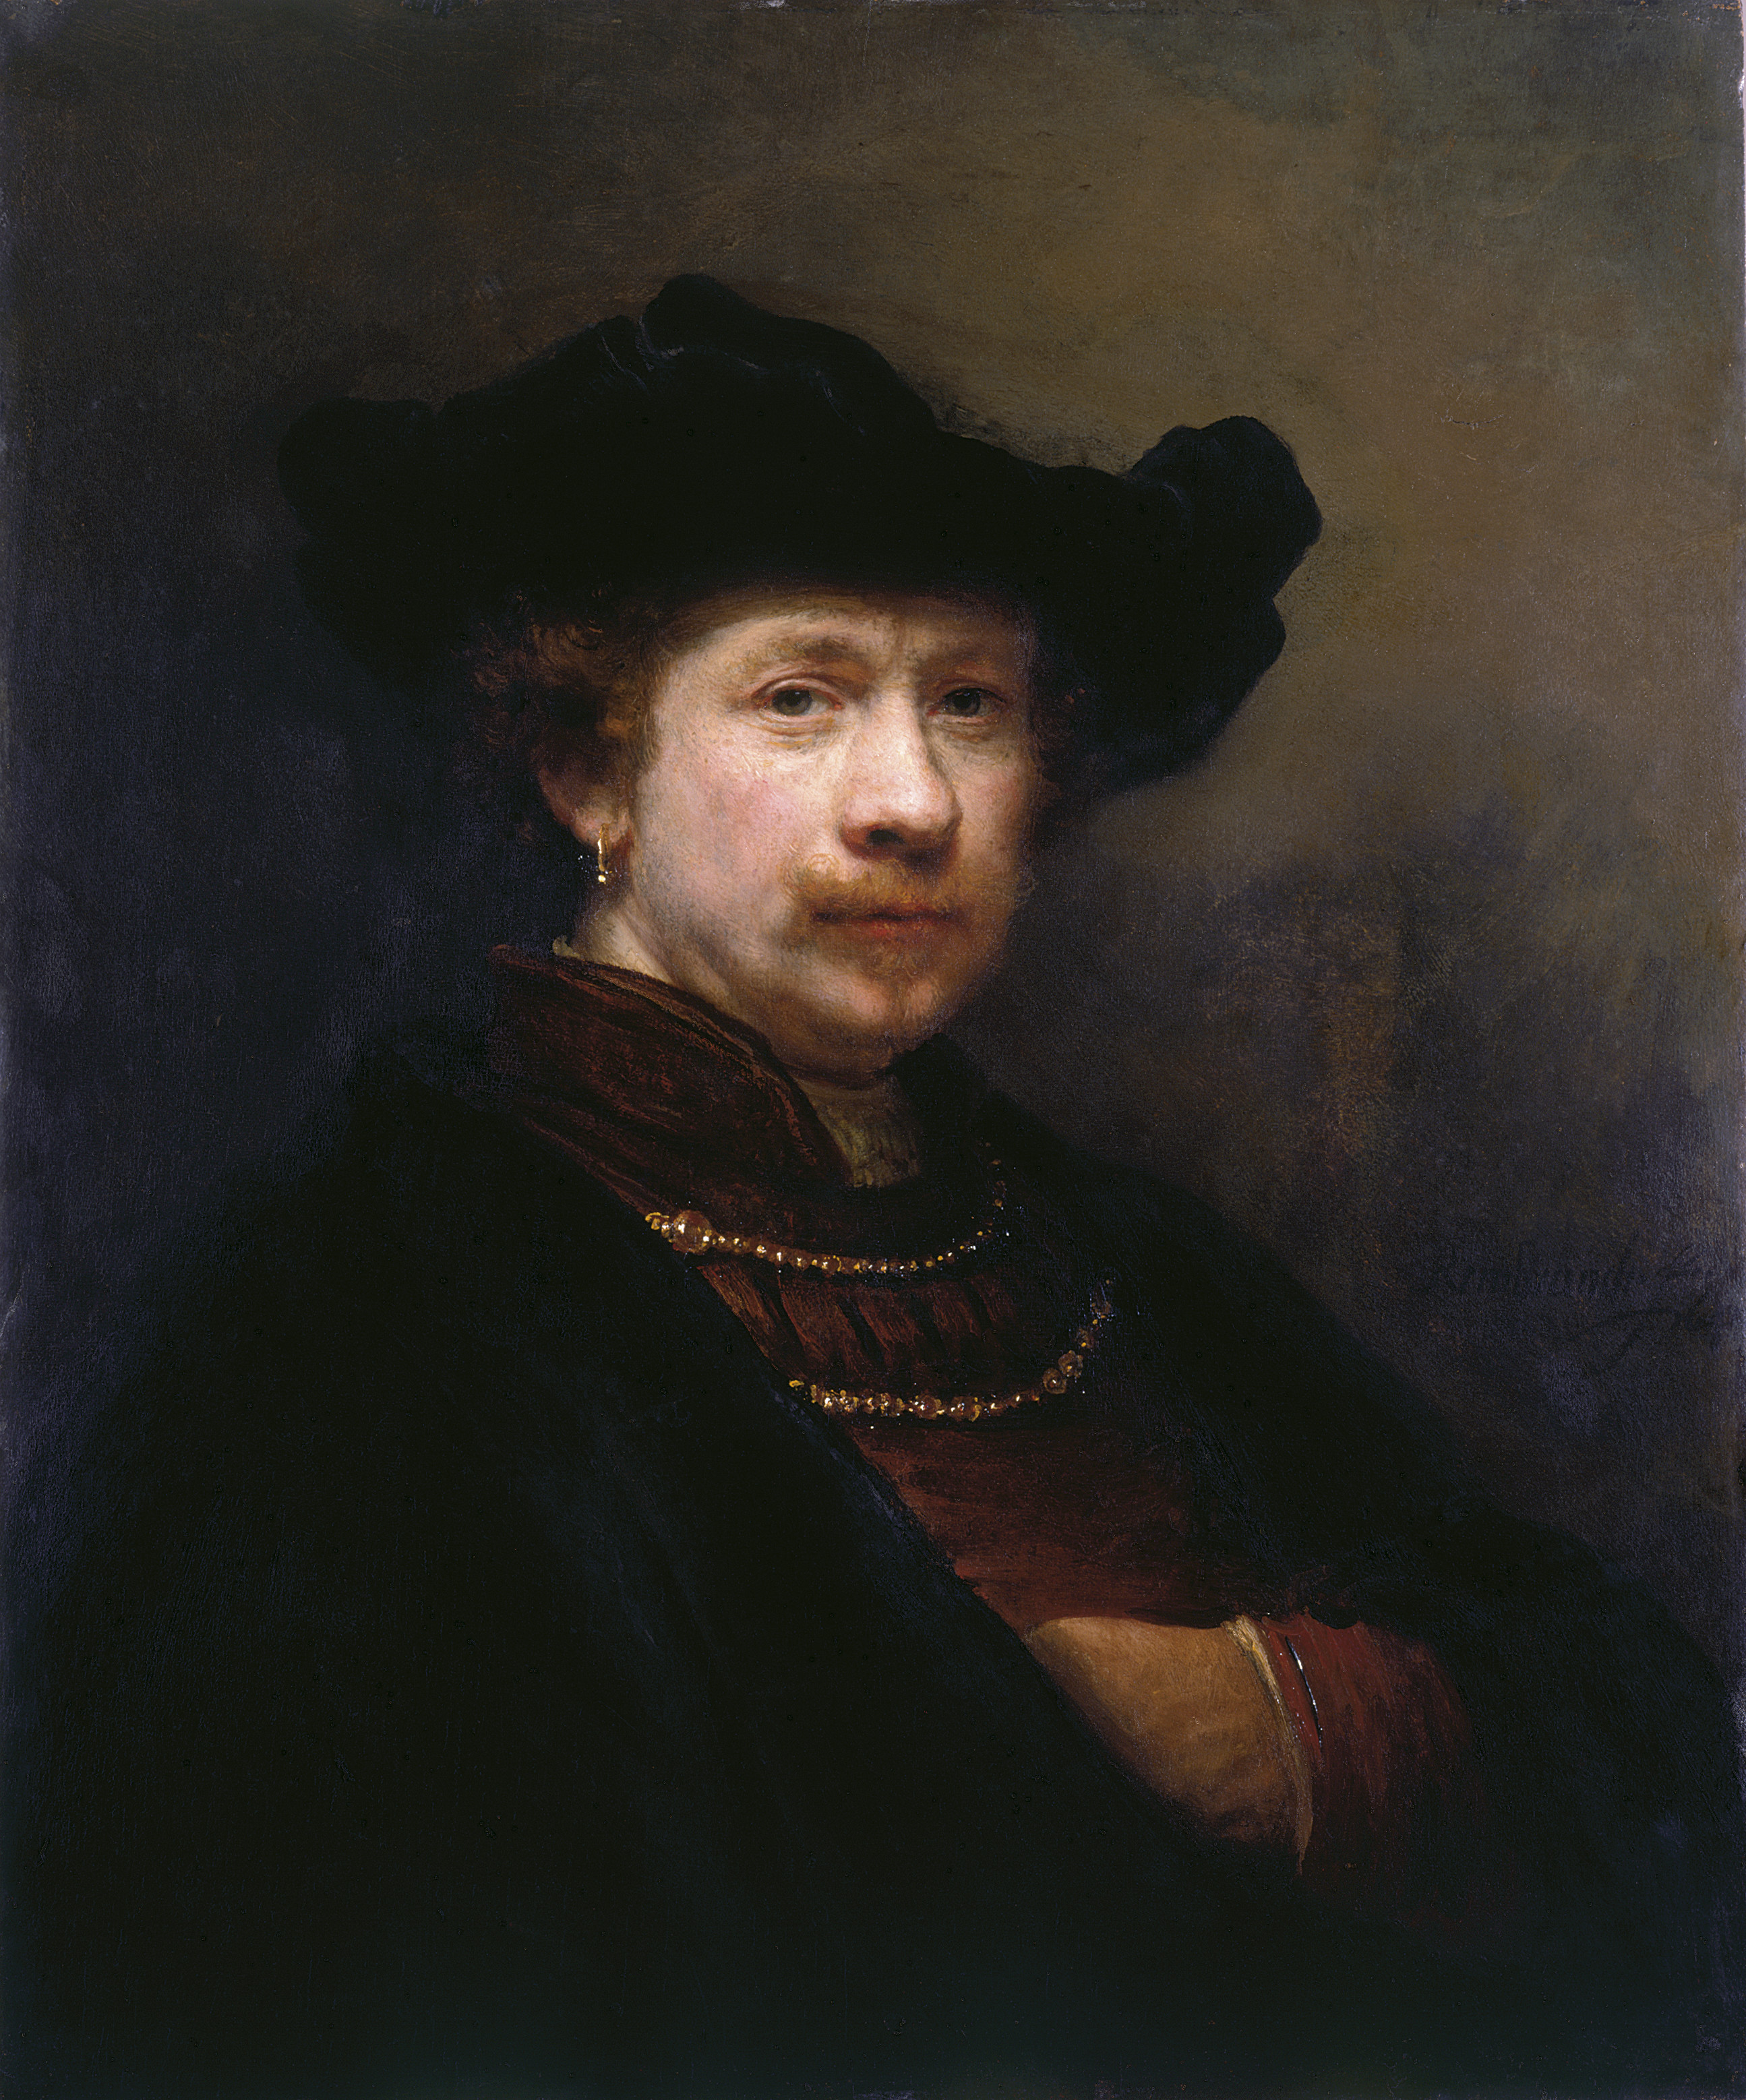 自画像 by Rembrandt van Rijn - 1642 